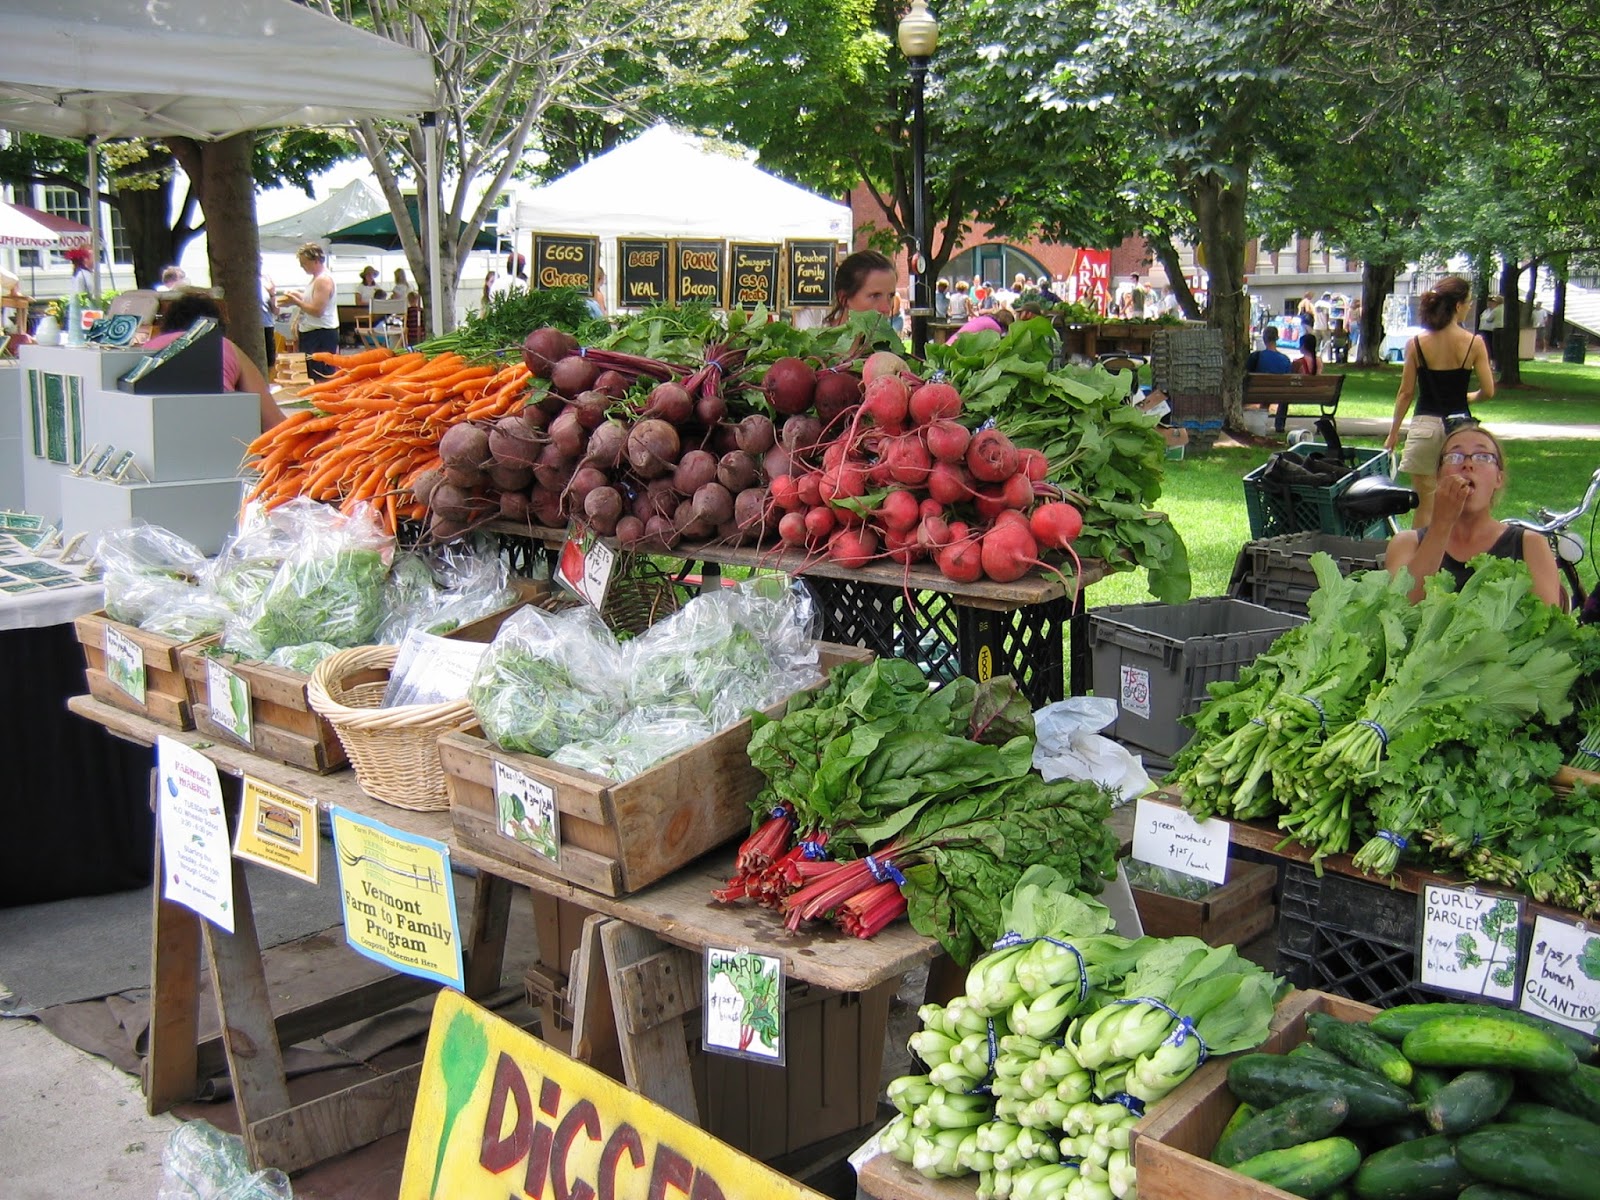 Visit a Vermont Farmers Markets, Farm Stand or Community Garden